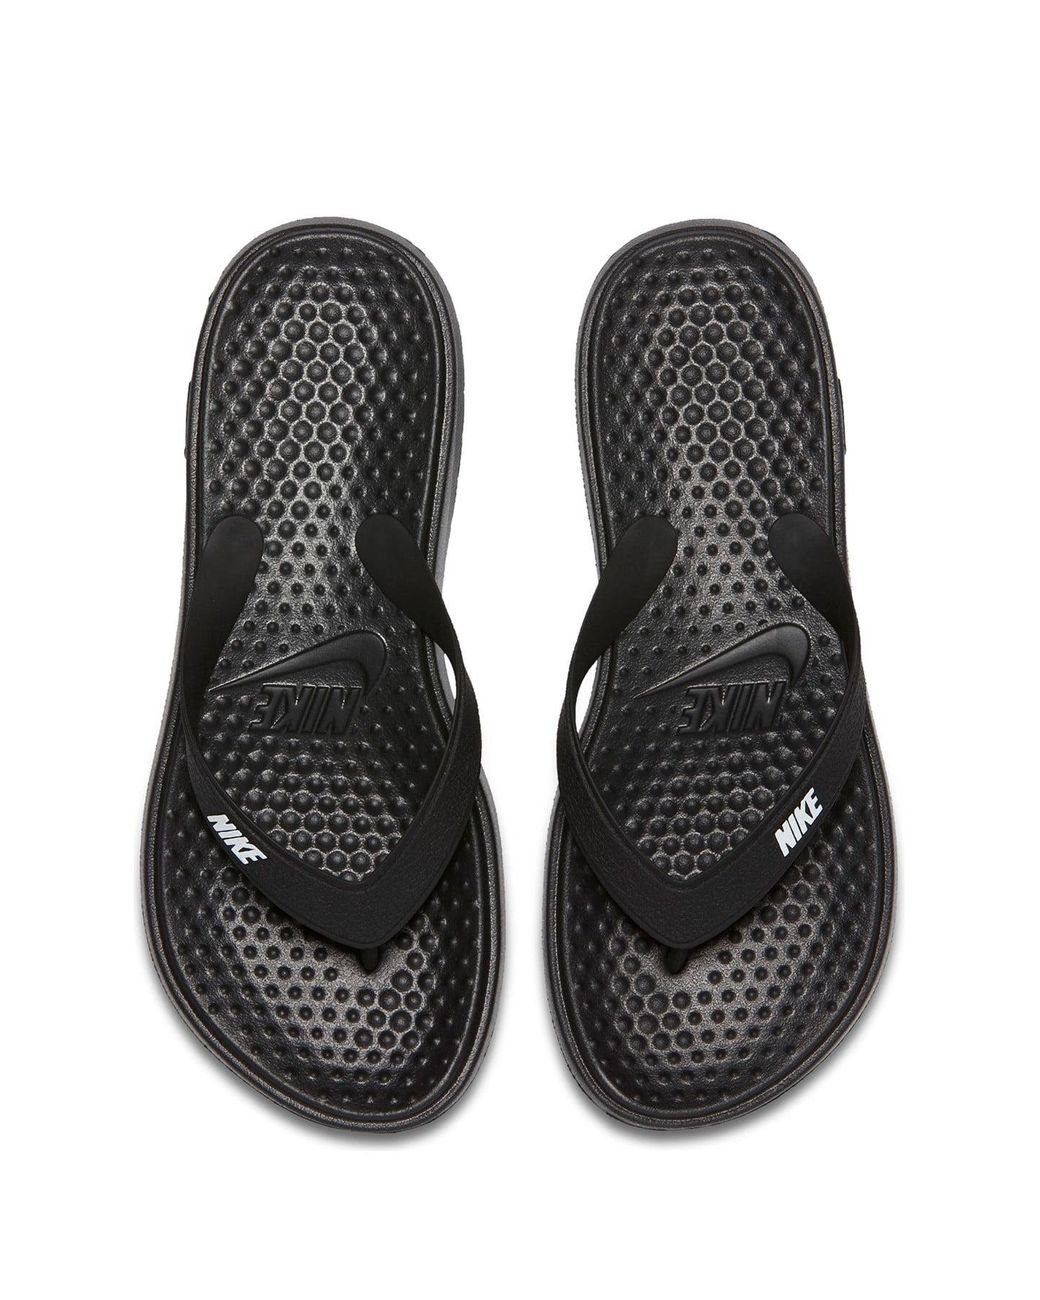 Nike Solay Flip-flop Shoe in Black | Lyst